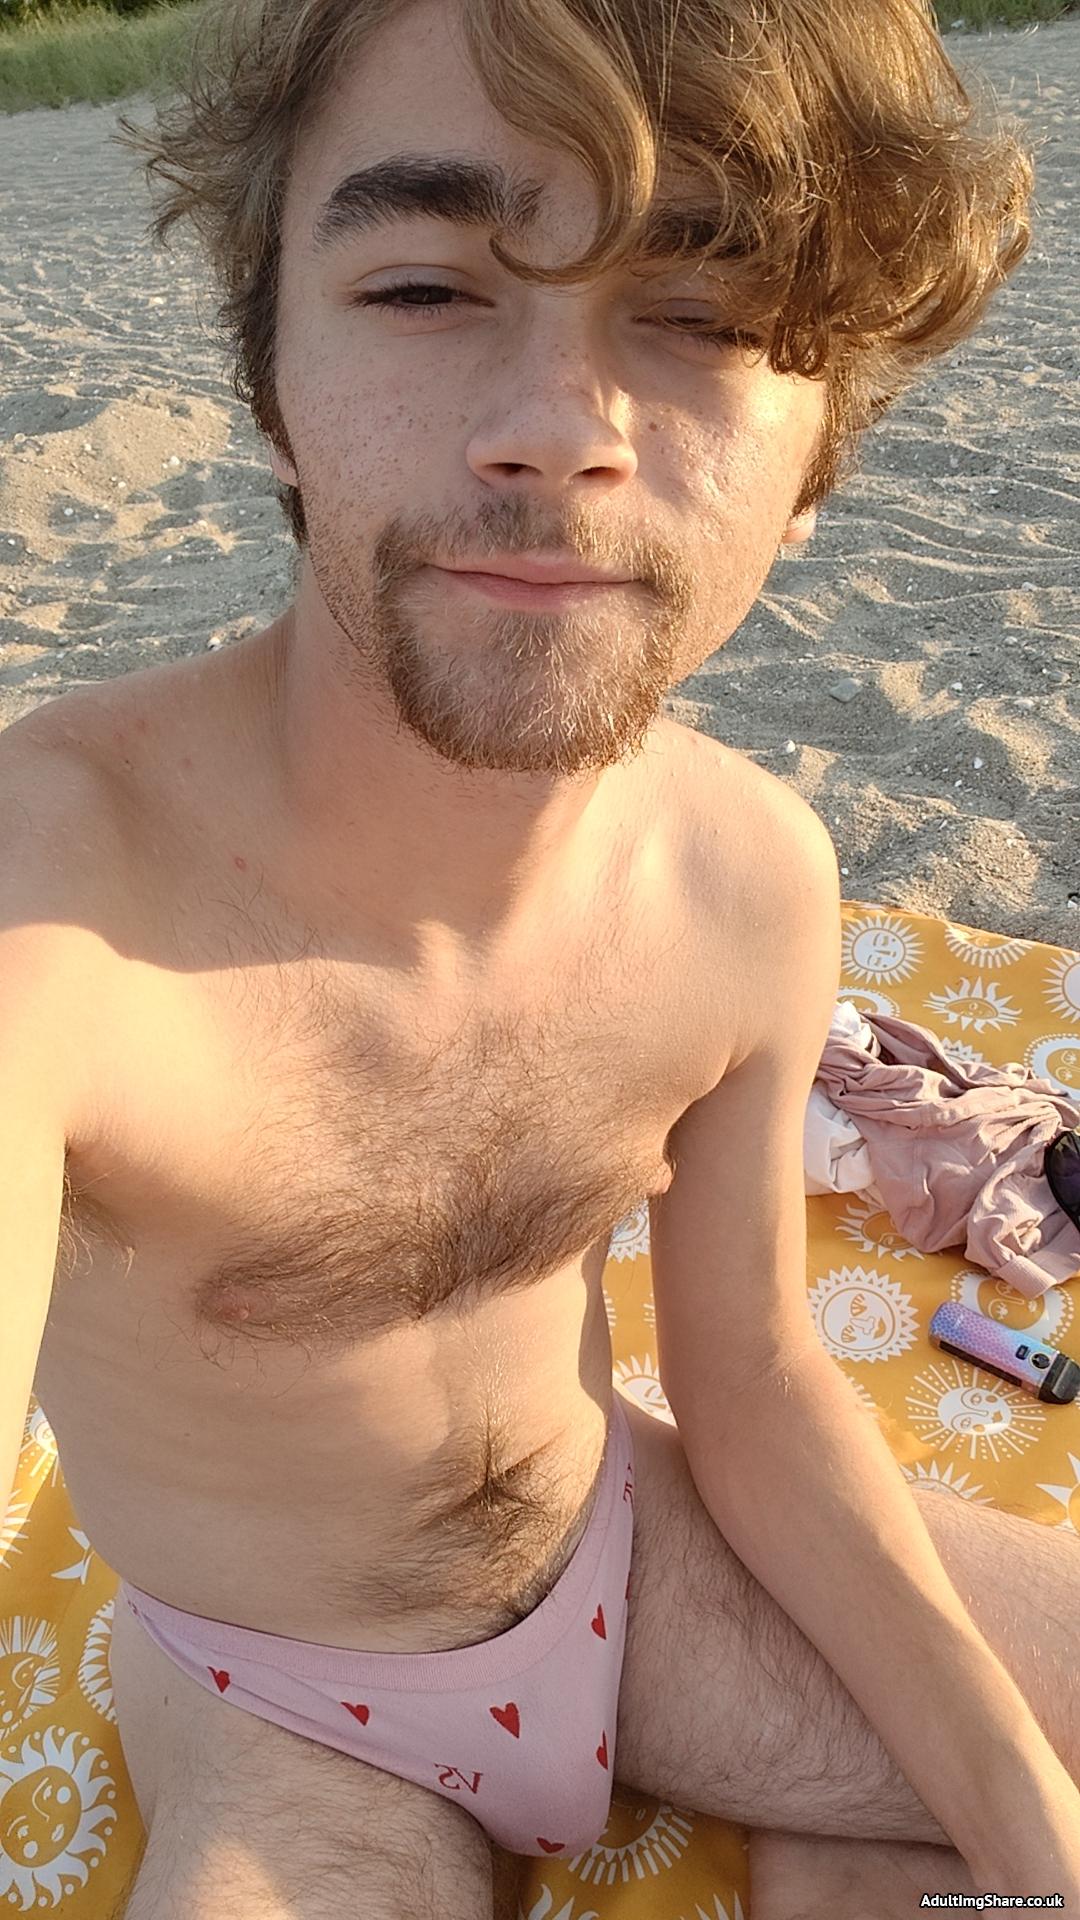 Chillin on the beach